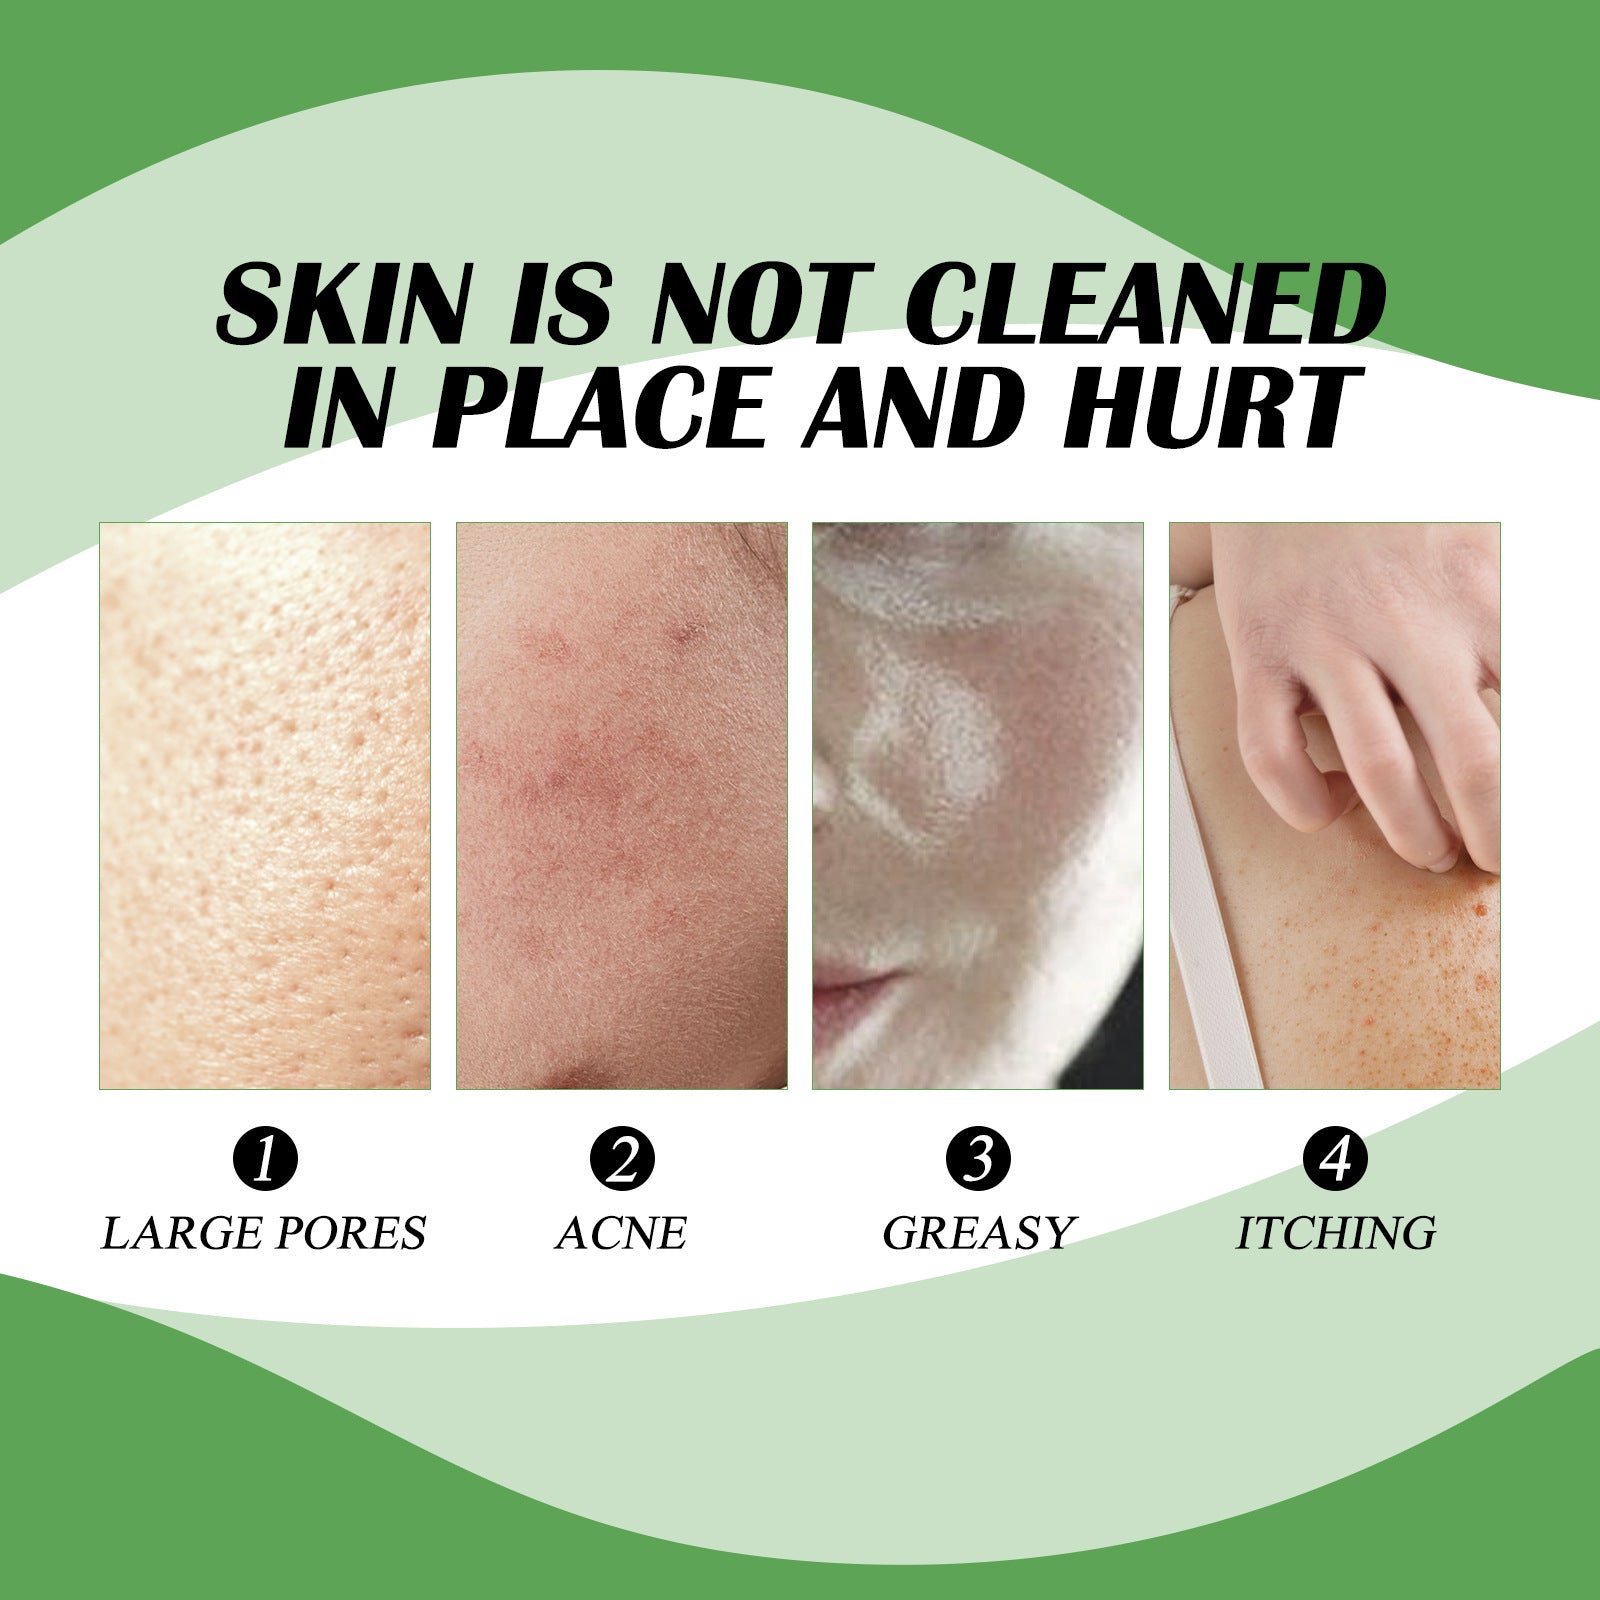 Tiktok/Douyin Hot Jaysuing Bamboo Charcoal Facial Soap 100g 【Tiktok抖音爆款】Jaysuing竹炭洁面皂